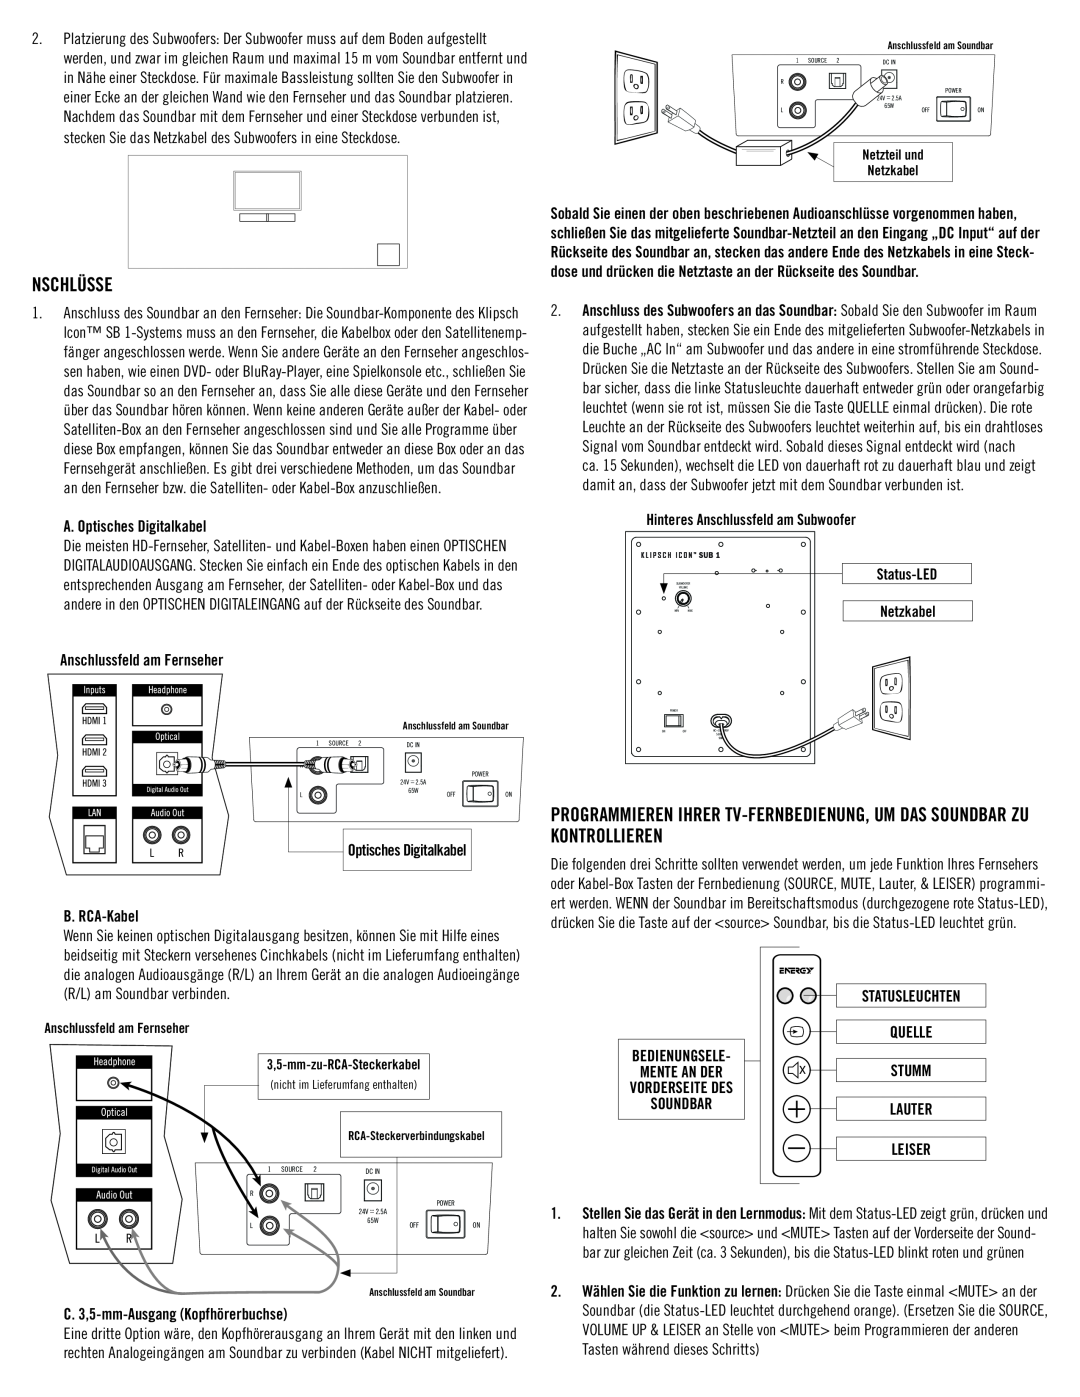 Klipsch SB 1 owner manual Nschlüsse, A. Optisches Digitalkabel, Anschlussfeld am Fernseher, B. RCA-Kabel, Soundbar 